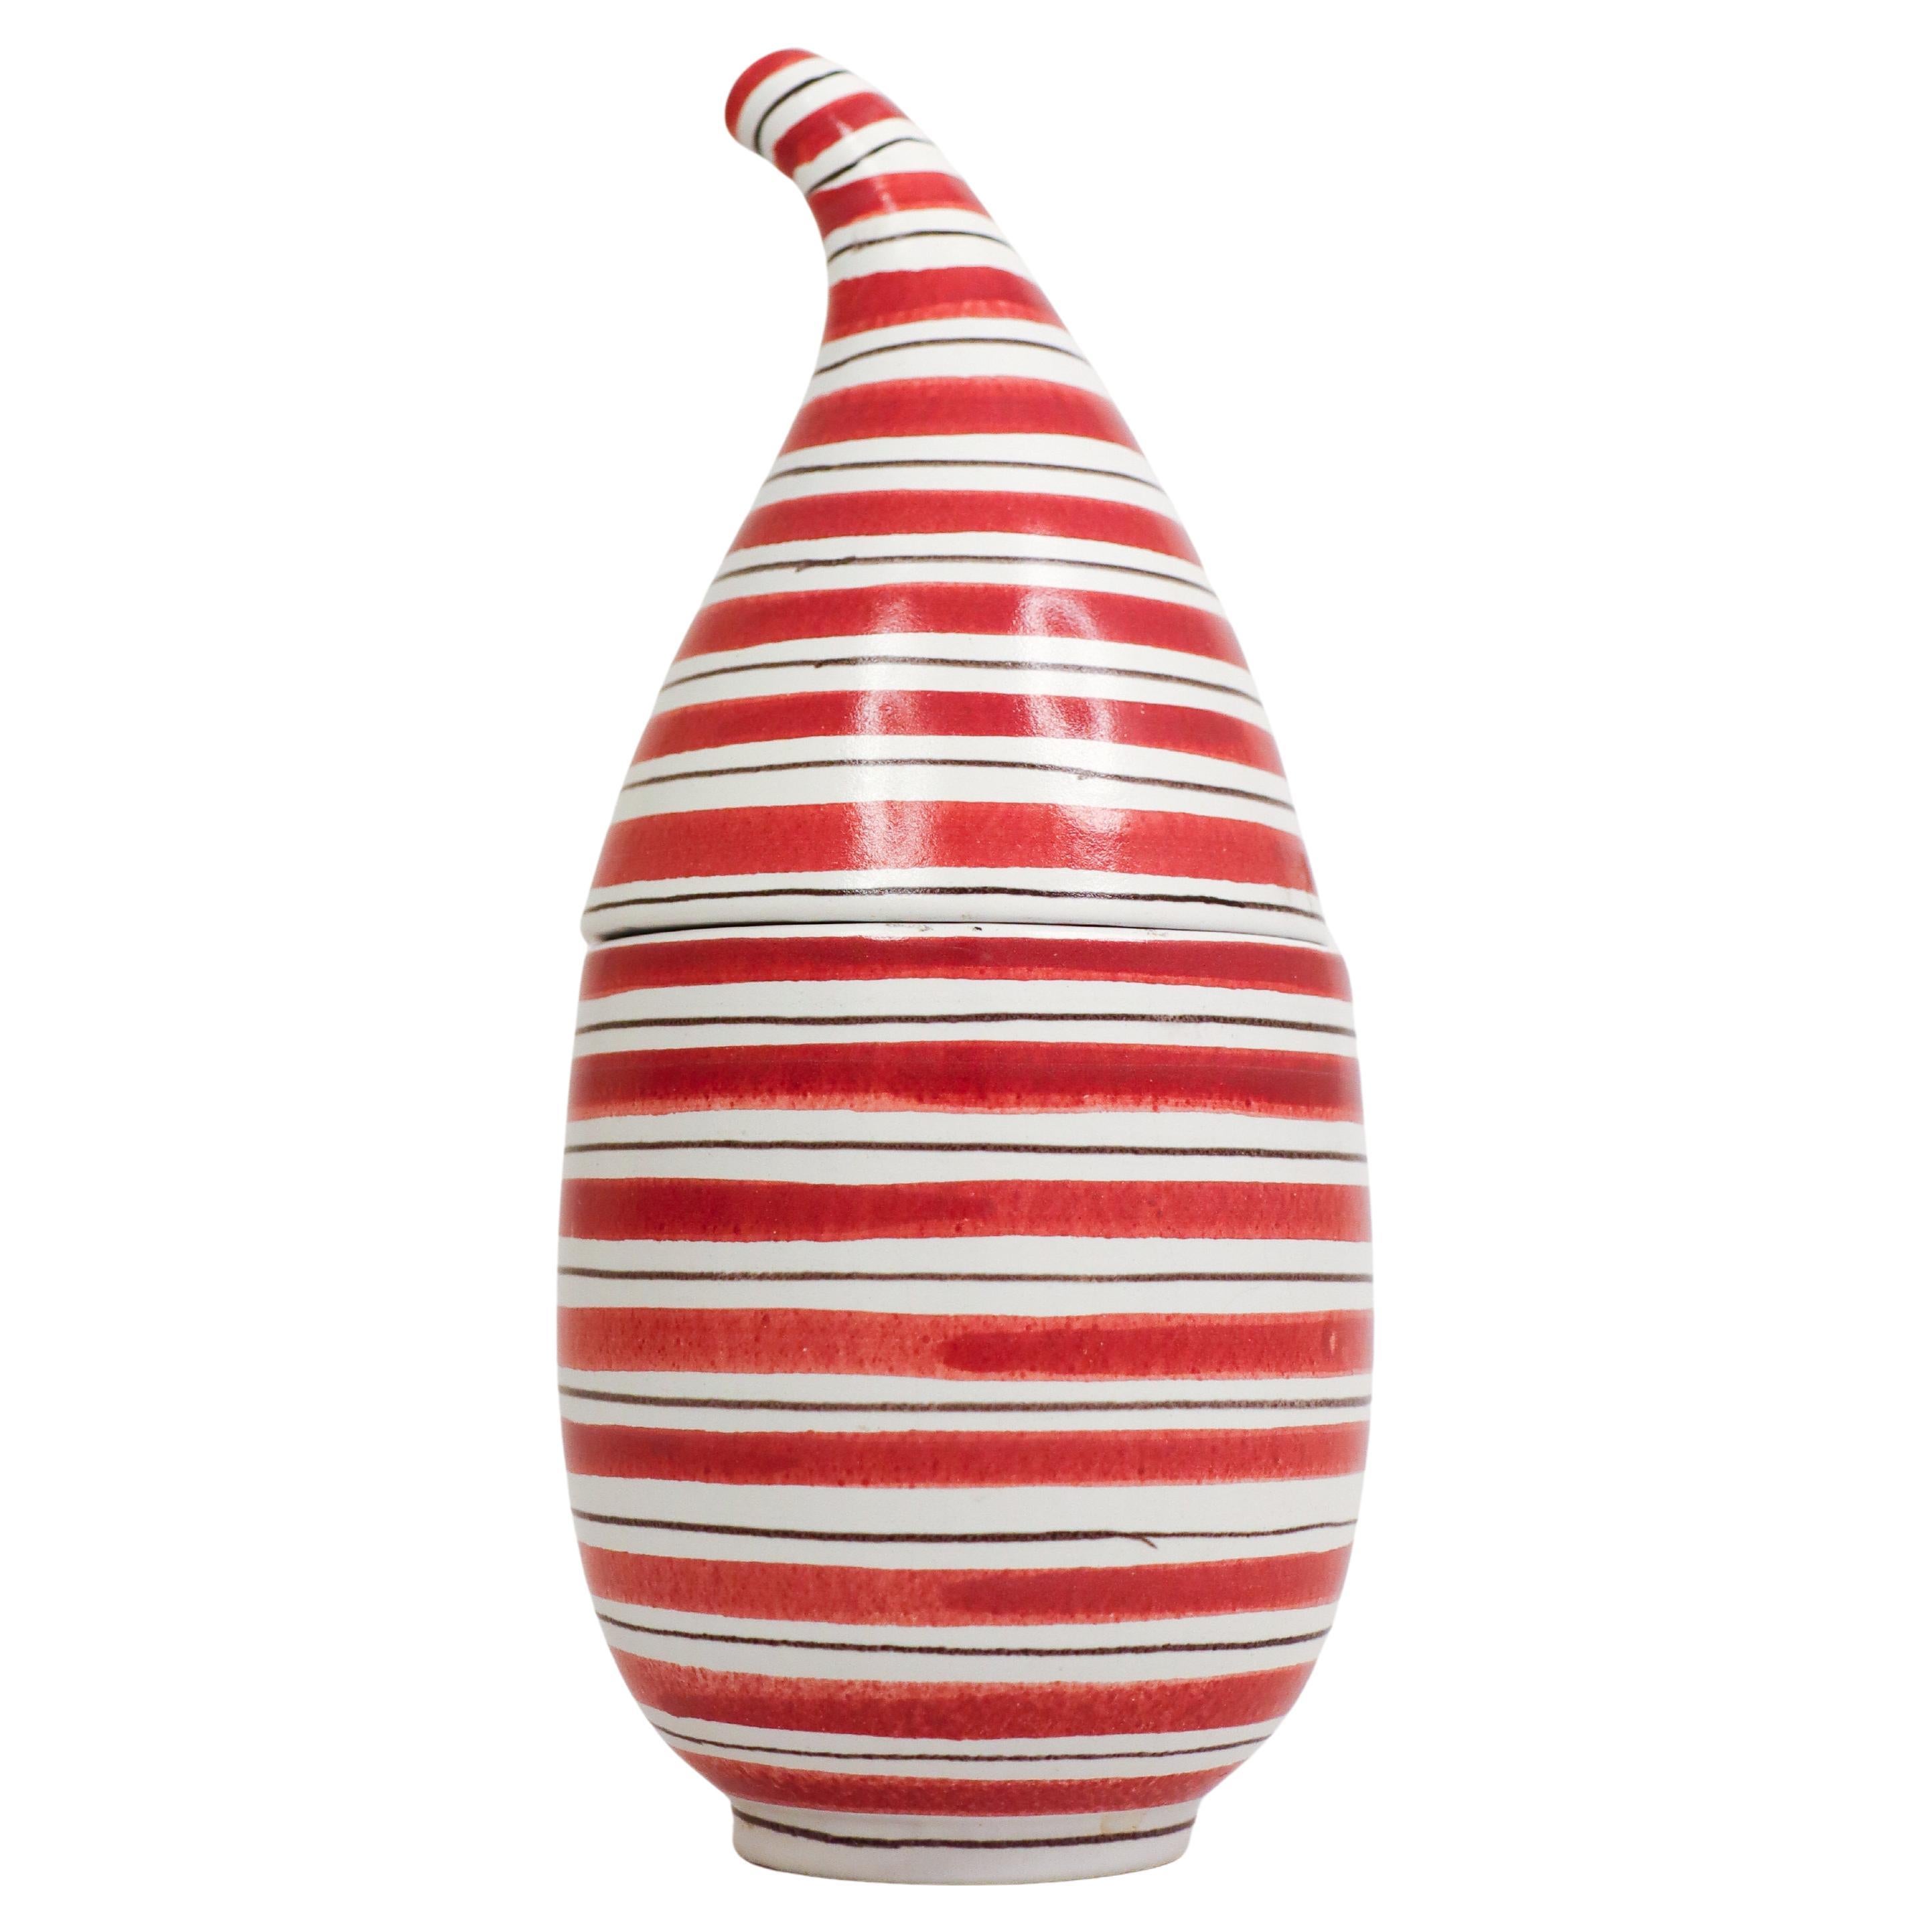 Rare Faience Lidded Bowl Red & White striped Stig Lindberg - Gustavsberg 1950s